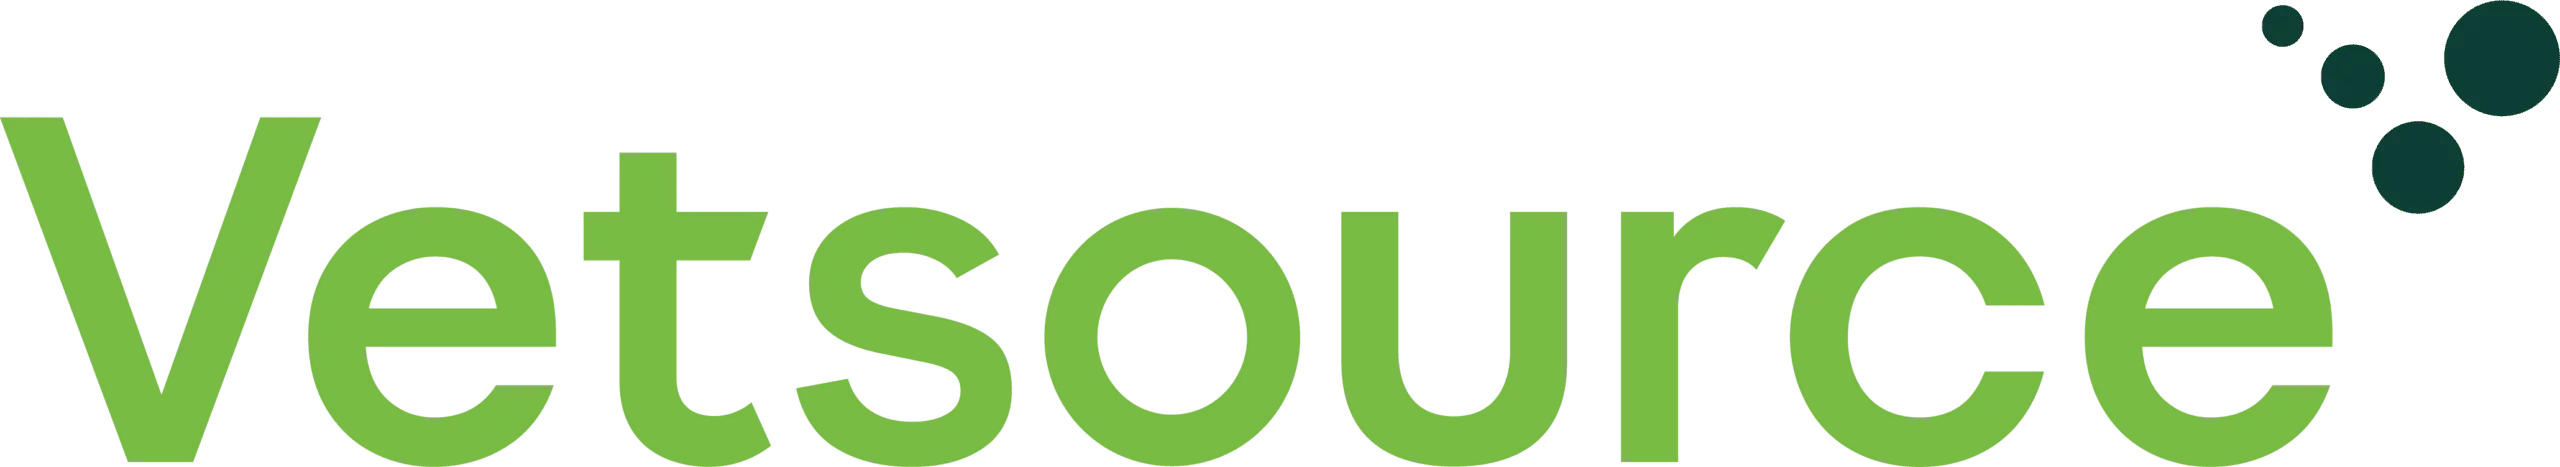 Vetsource logo - large